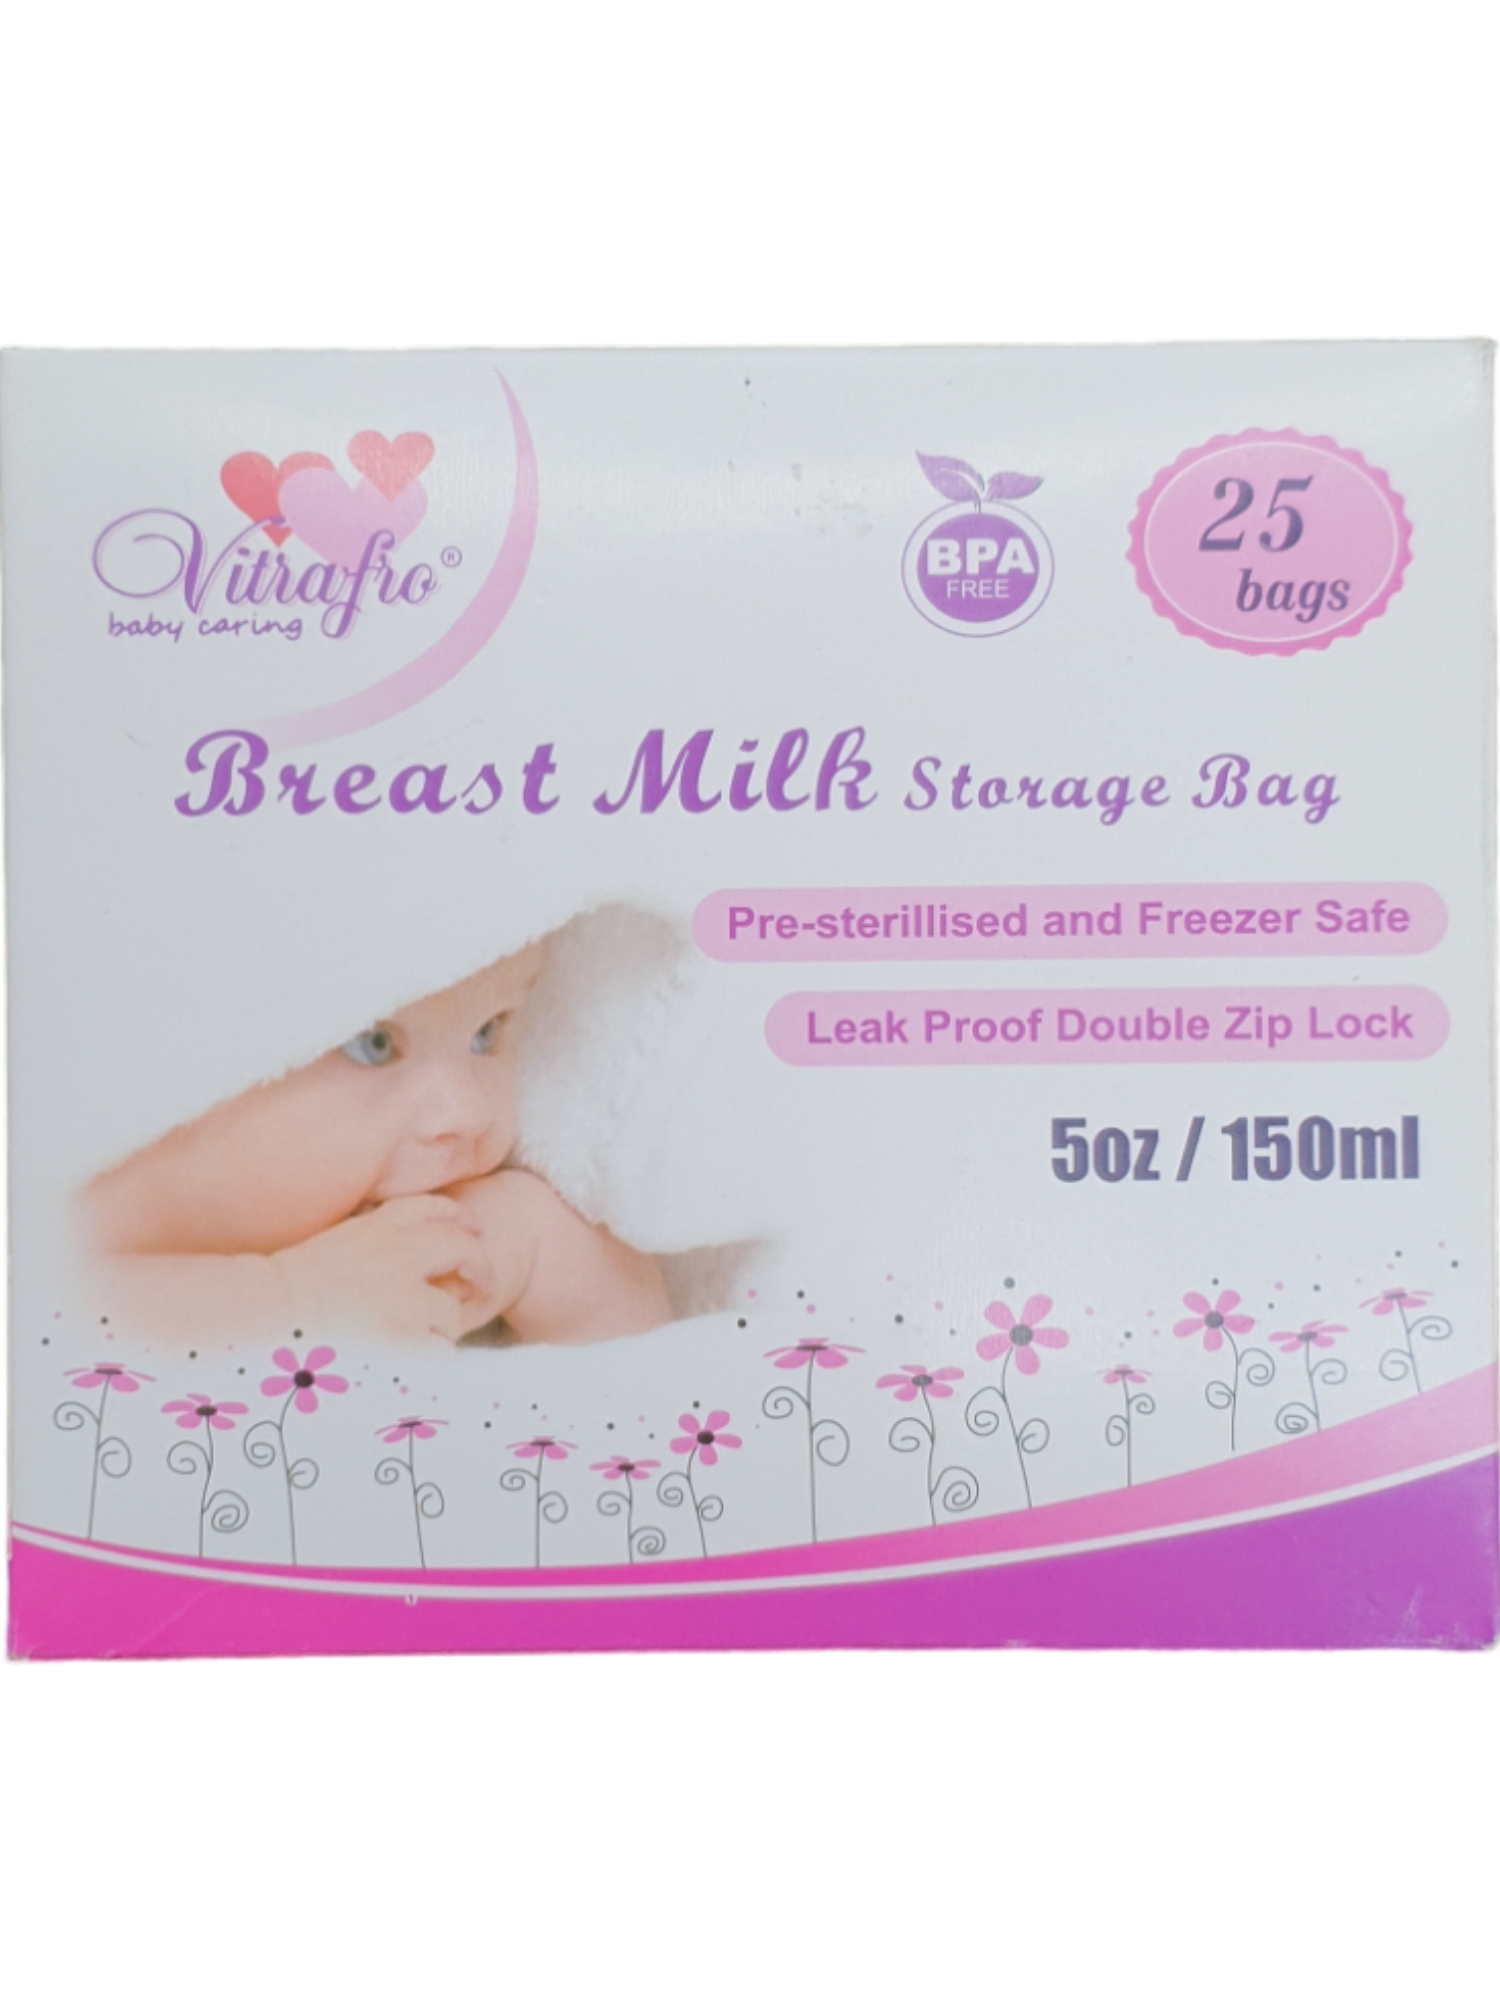 Vitrafro Breast Milk Storage Bag 5oz/150ml 25'pcs